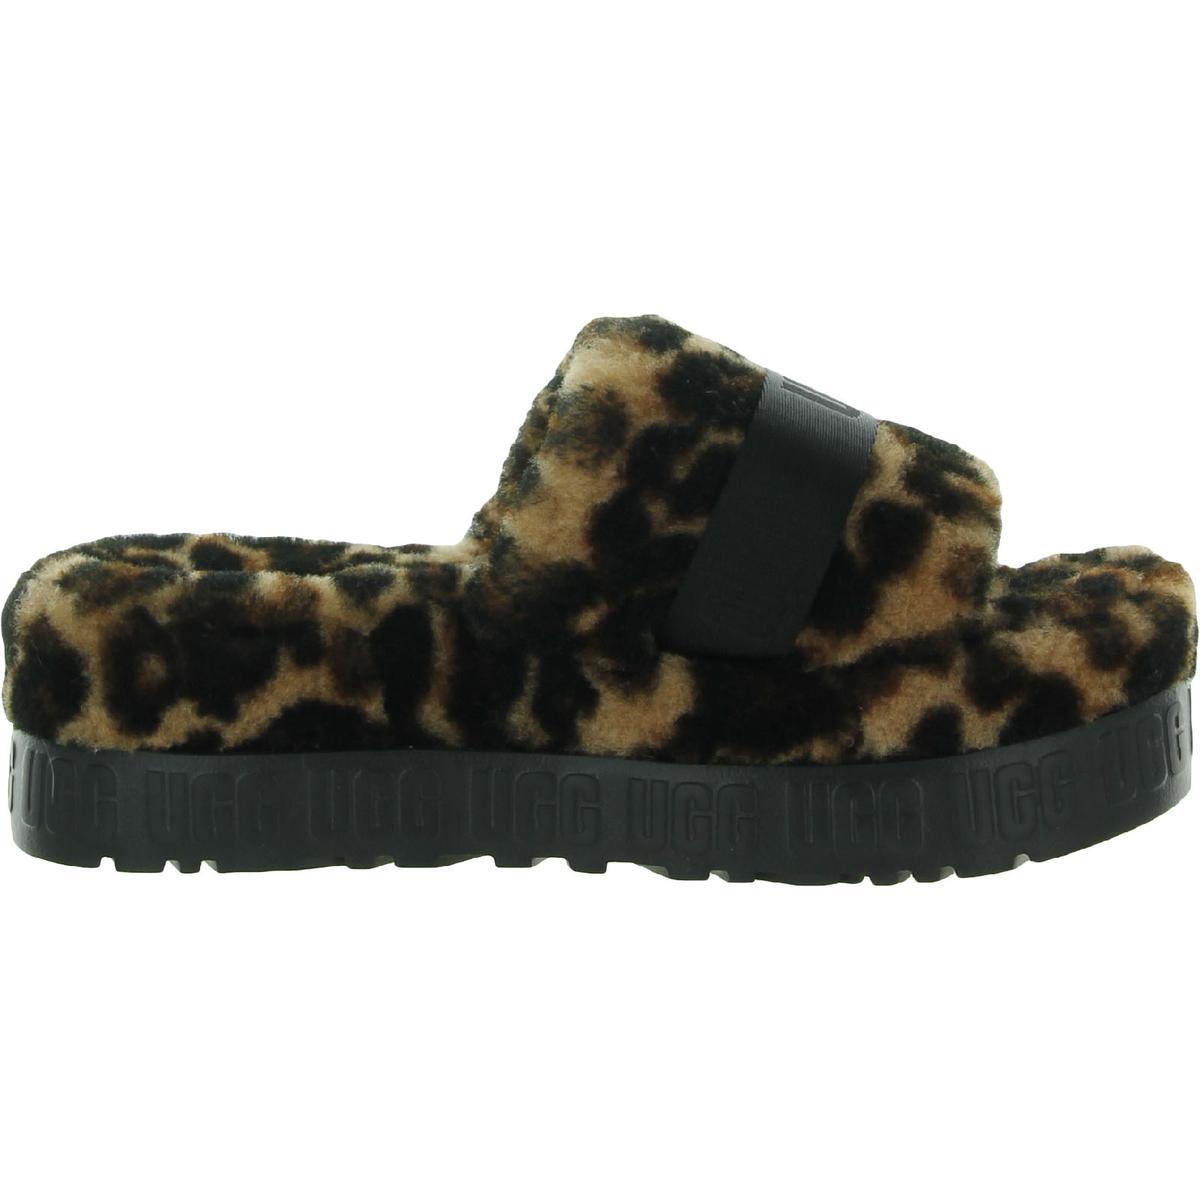 Ugg Womens Fluffita Wool Slip On Comfort Slide Slippers Shoes Bhfo 6453 - Butterscotch Leopard